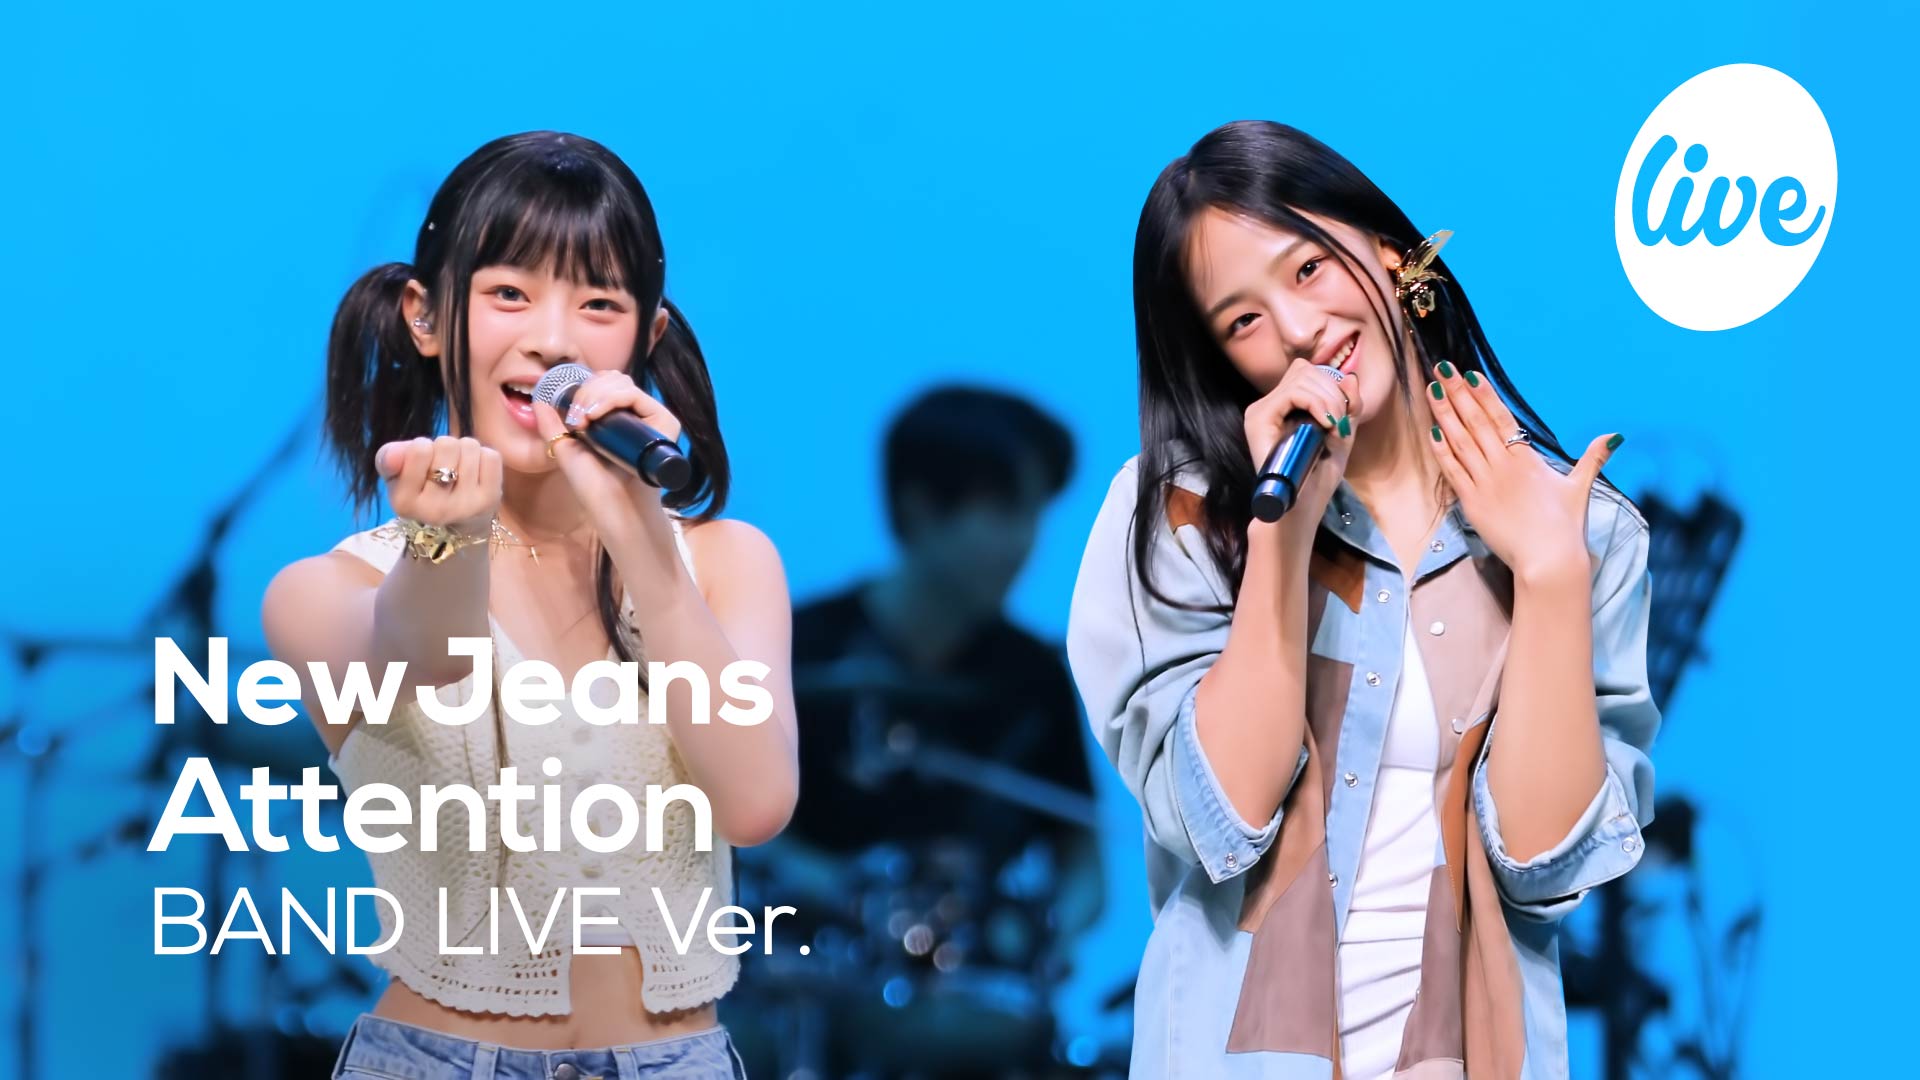 Attention live. NEWJEANS (뉴진스) 'attention'. New Jeans kpop группа. New Jeans кпоп группа с именами. New Jeans группа.